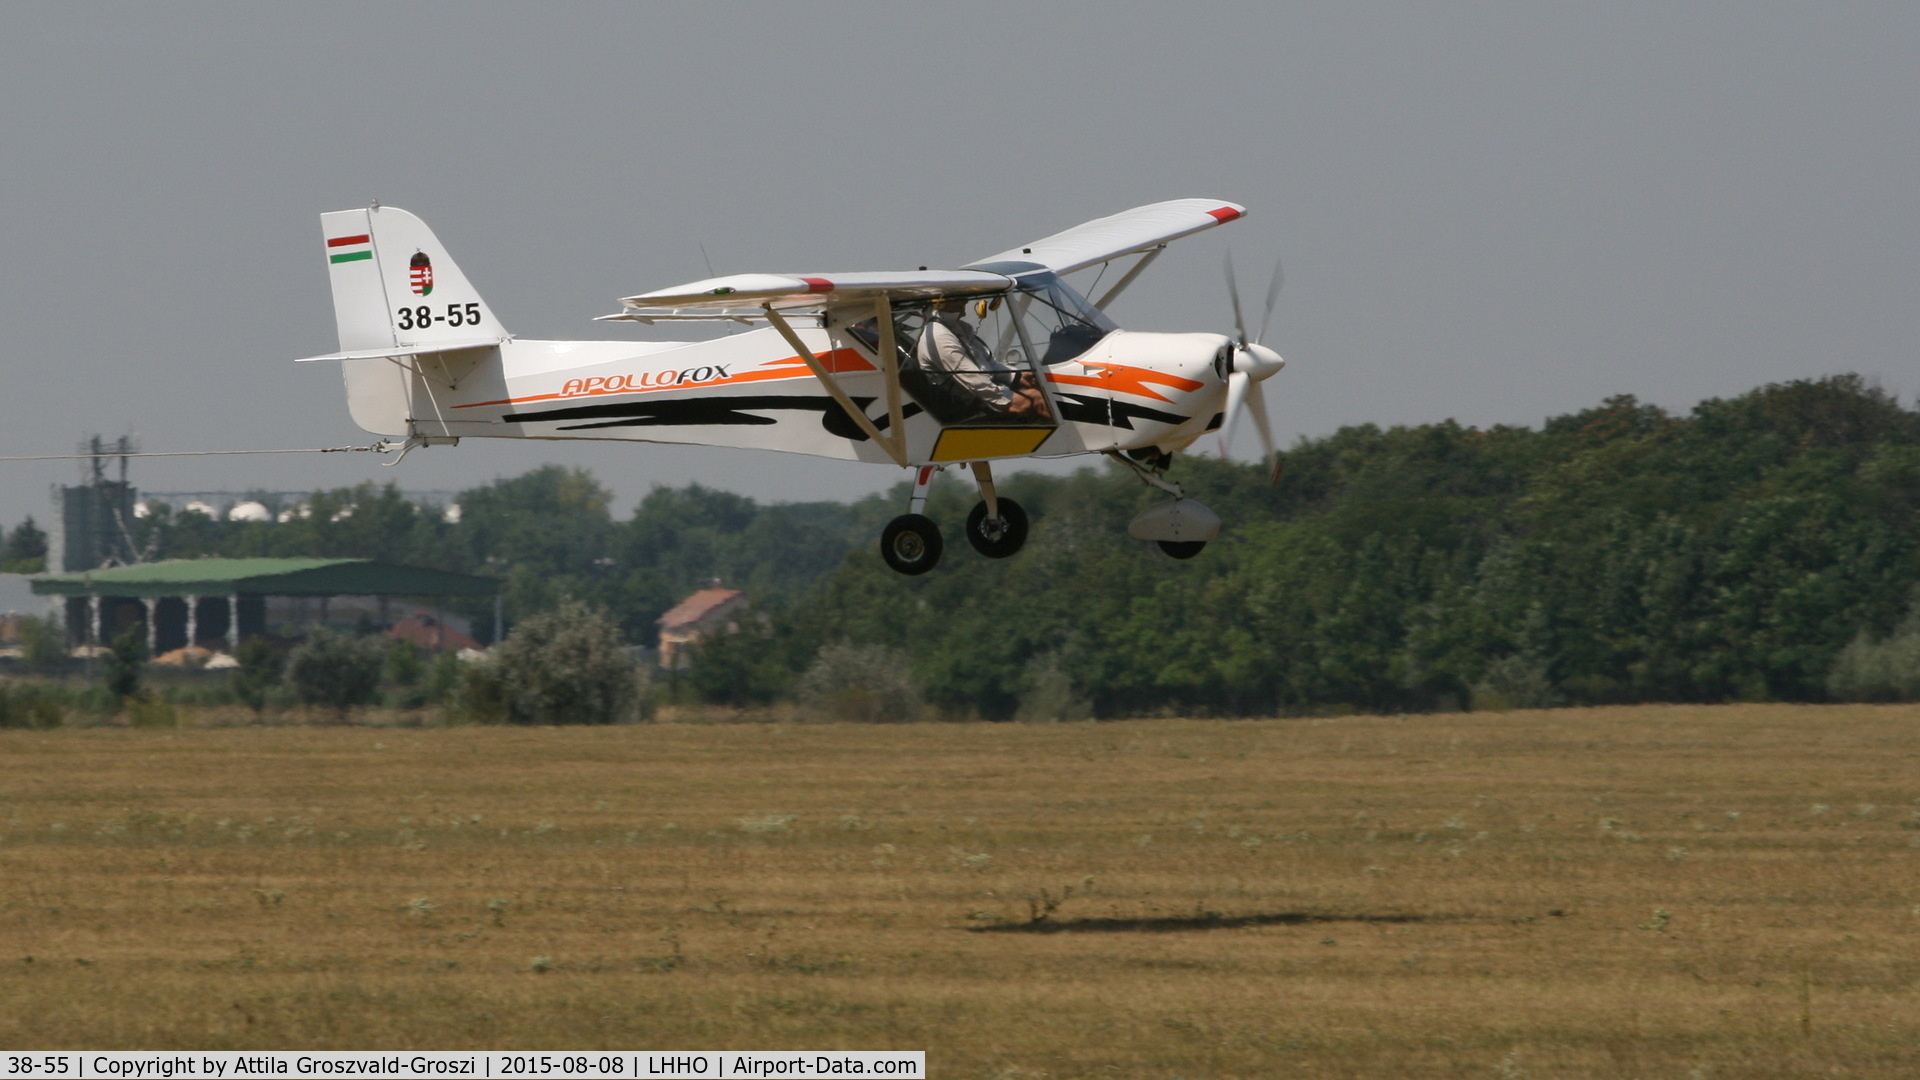 38-55, 2009 Halley Apollo Fox C/N 080509, Hajdúszoboszló Airport, Hungary - 60. Hungary Gliding National Championship and third Civis Thermal Cup, 2015